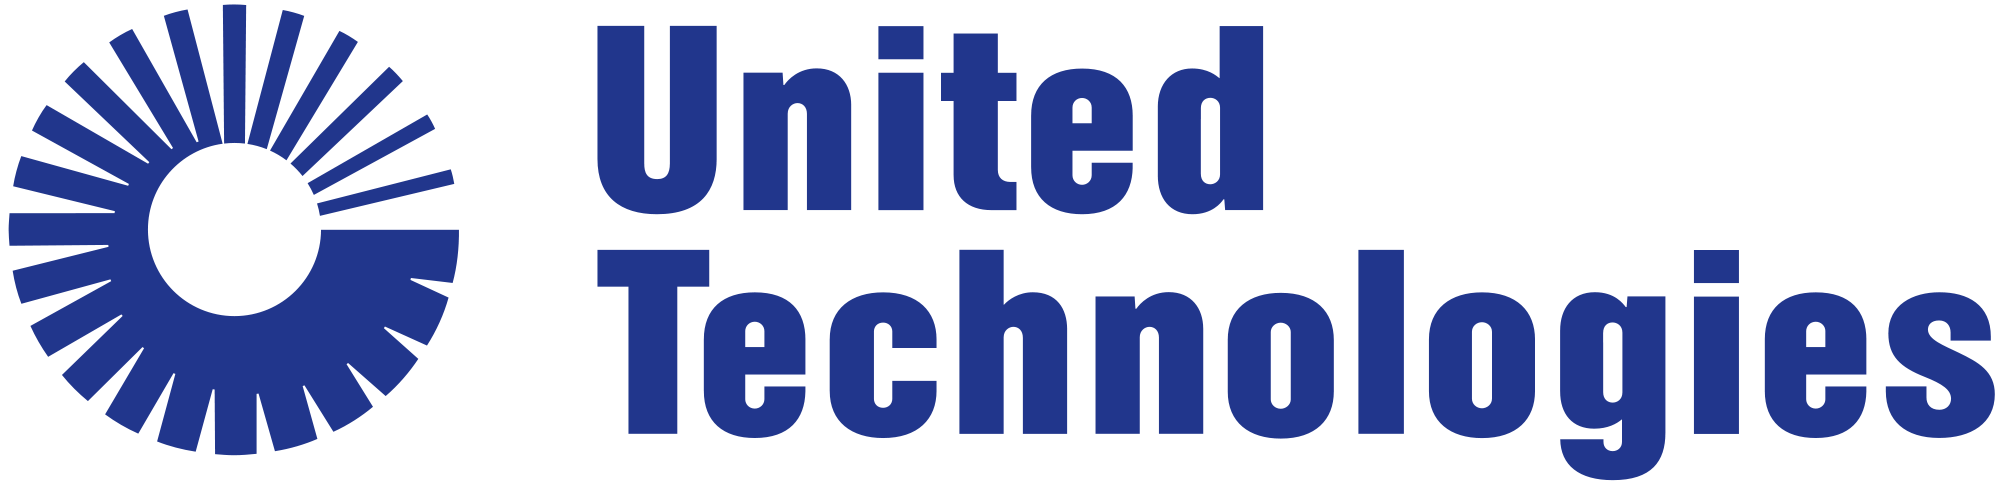 UnitedTechnologiesLogo.png